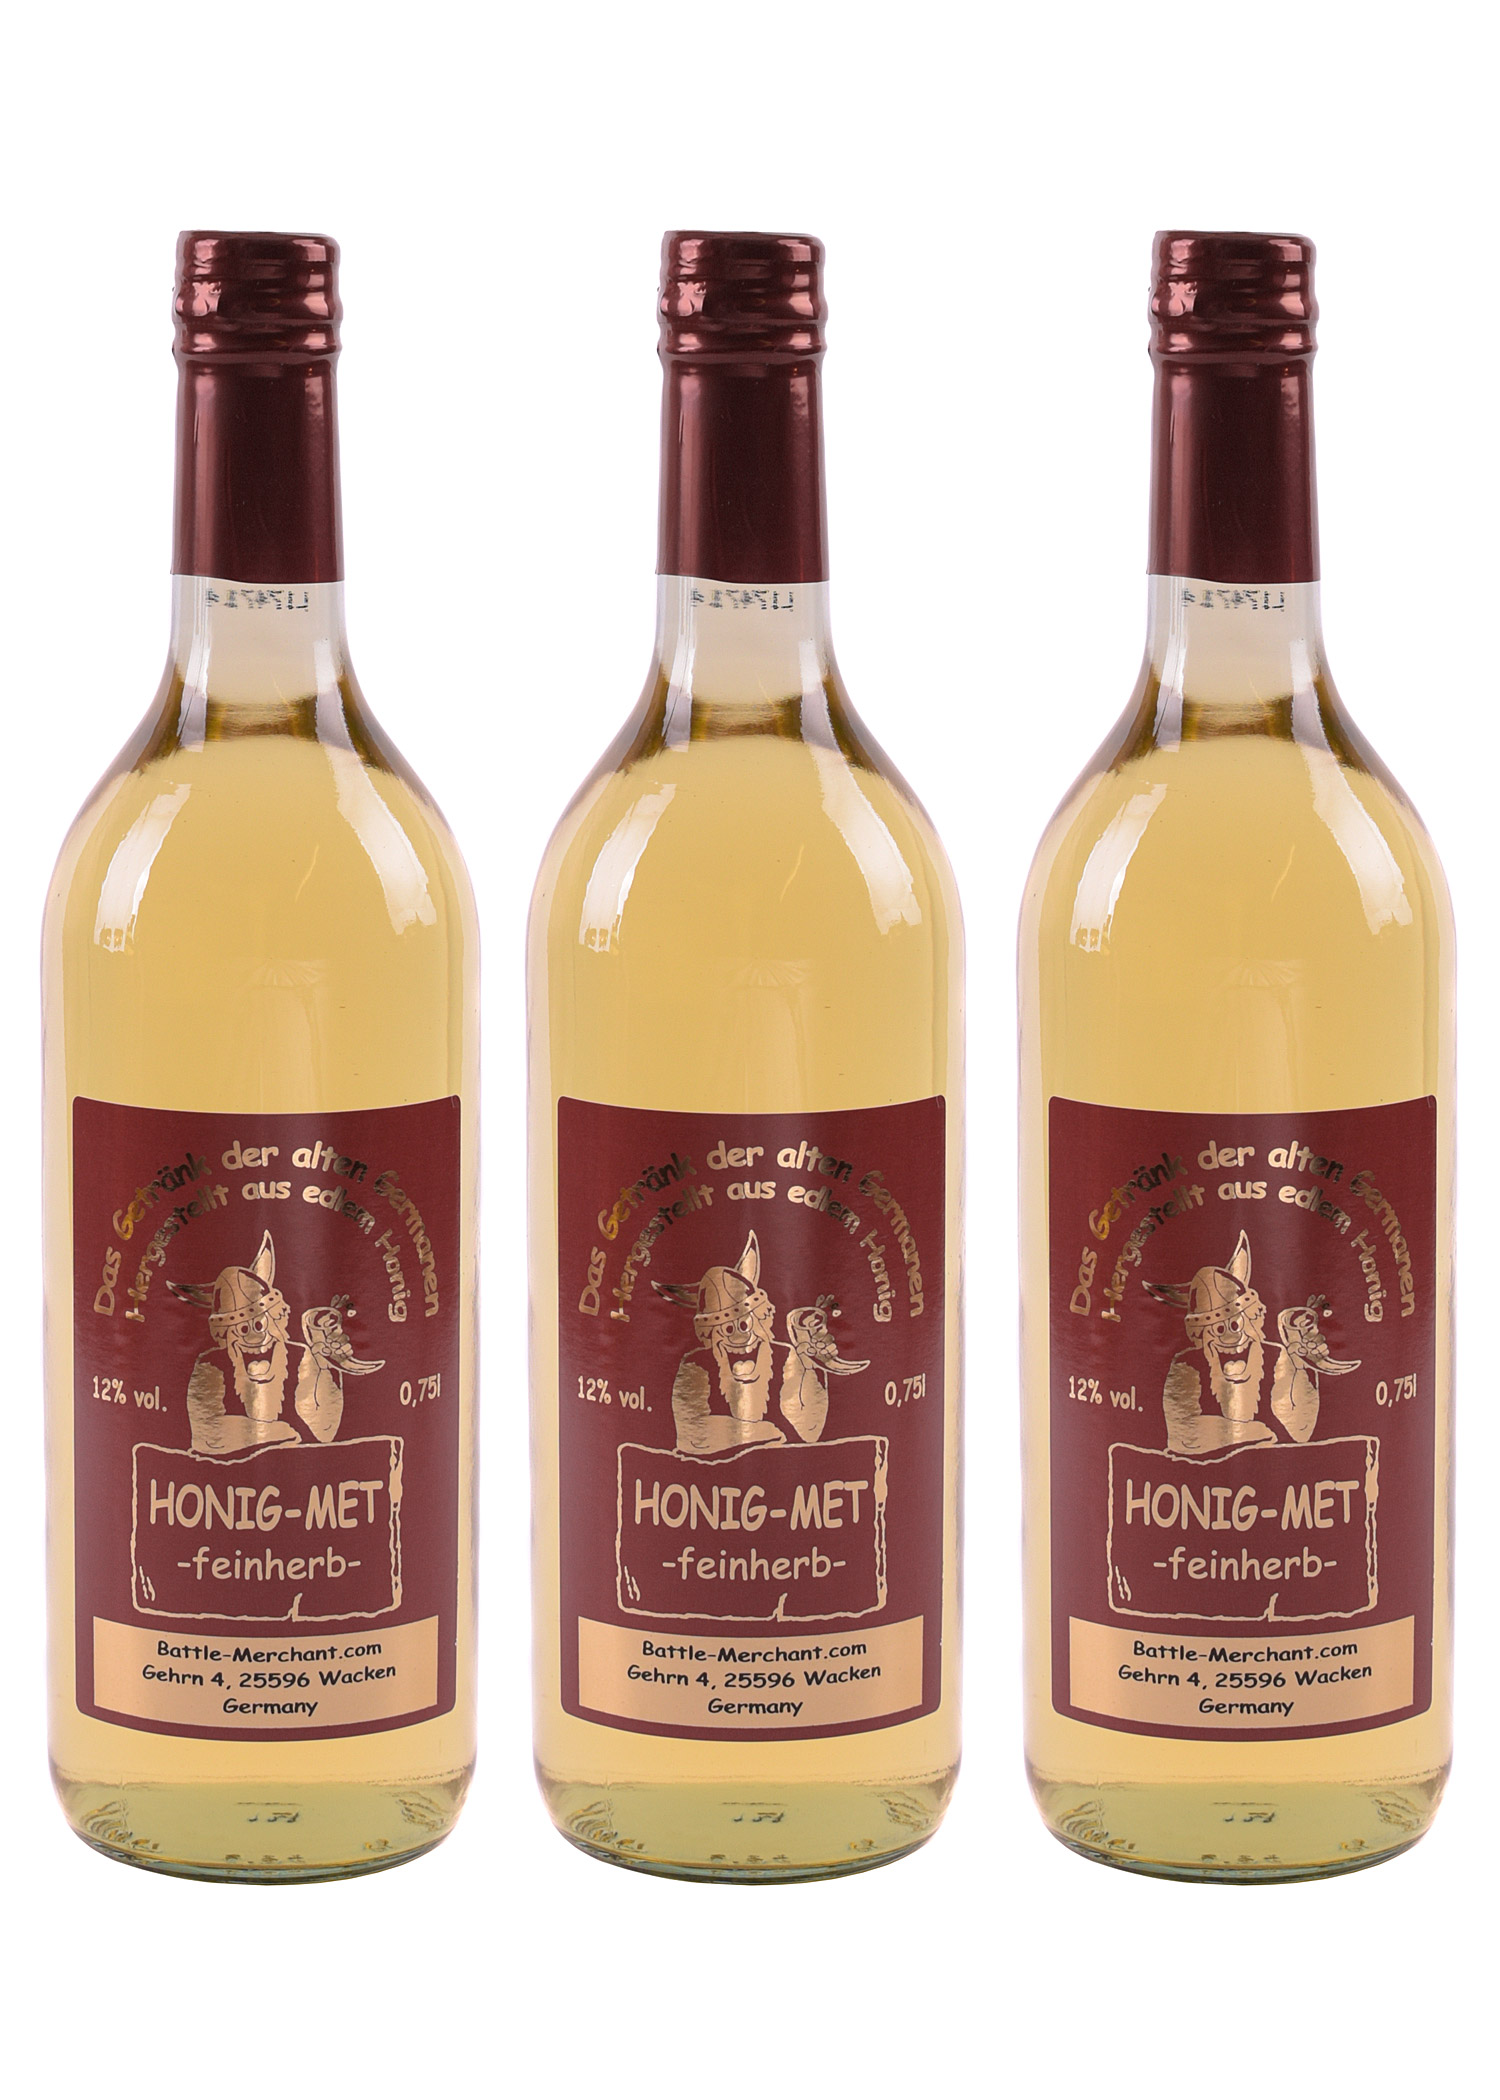 Vol. honeywine, Mead bottle, ⚔ 12% 0,75l dry, Battle-Merchant |